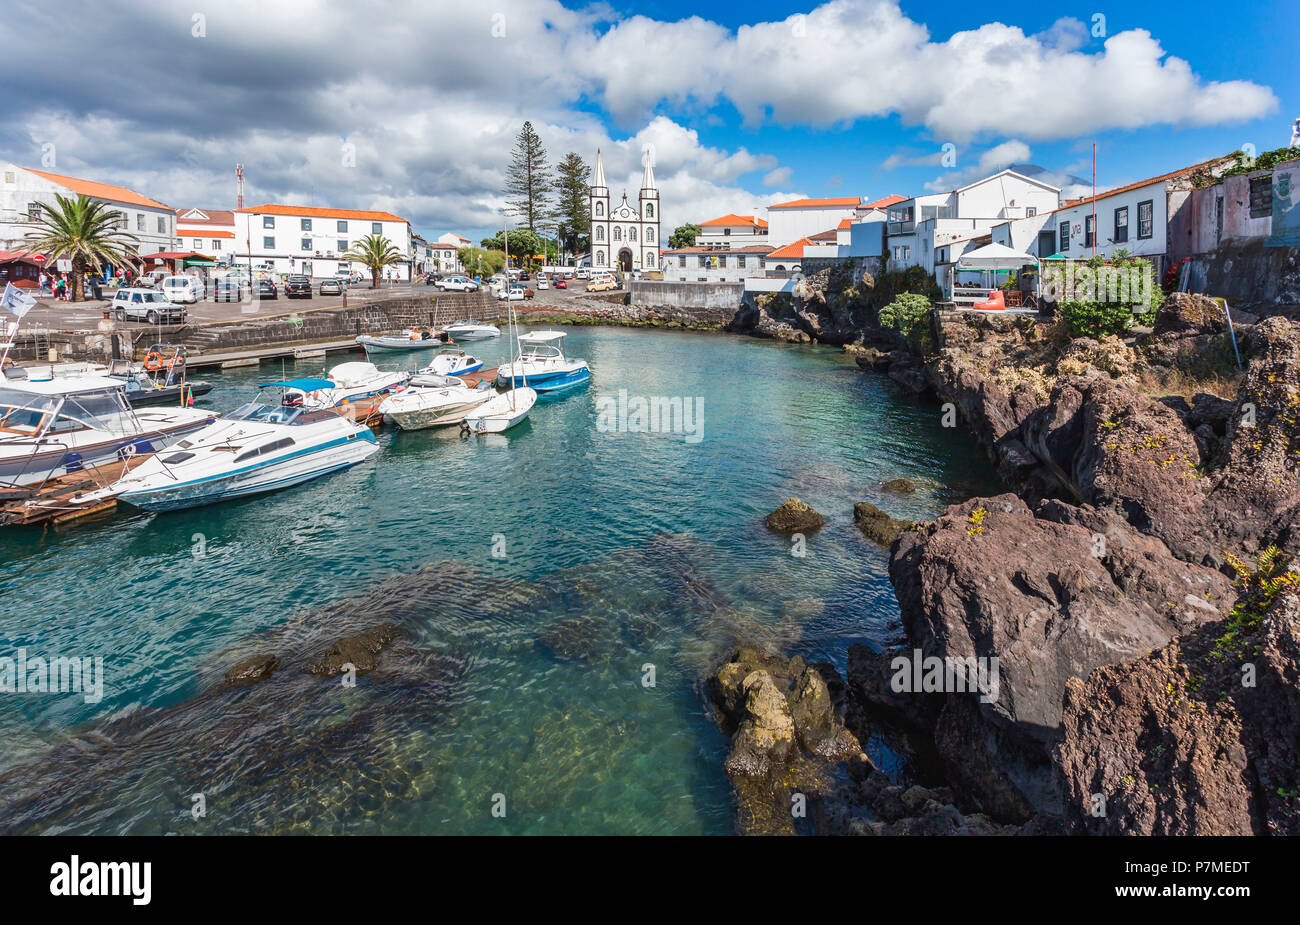 Portugal, Azores, Pico Island, Madalena, harbor view with the Igreja de Santa Madalena church Stock Photo